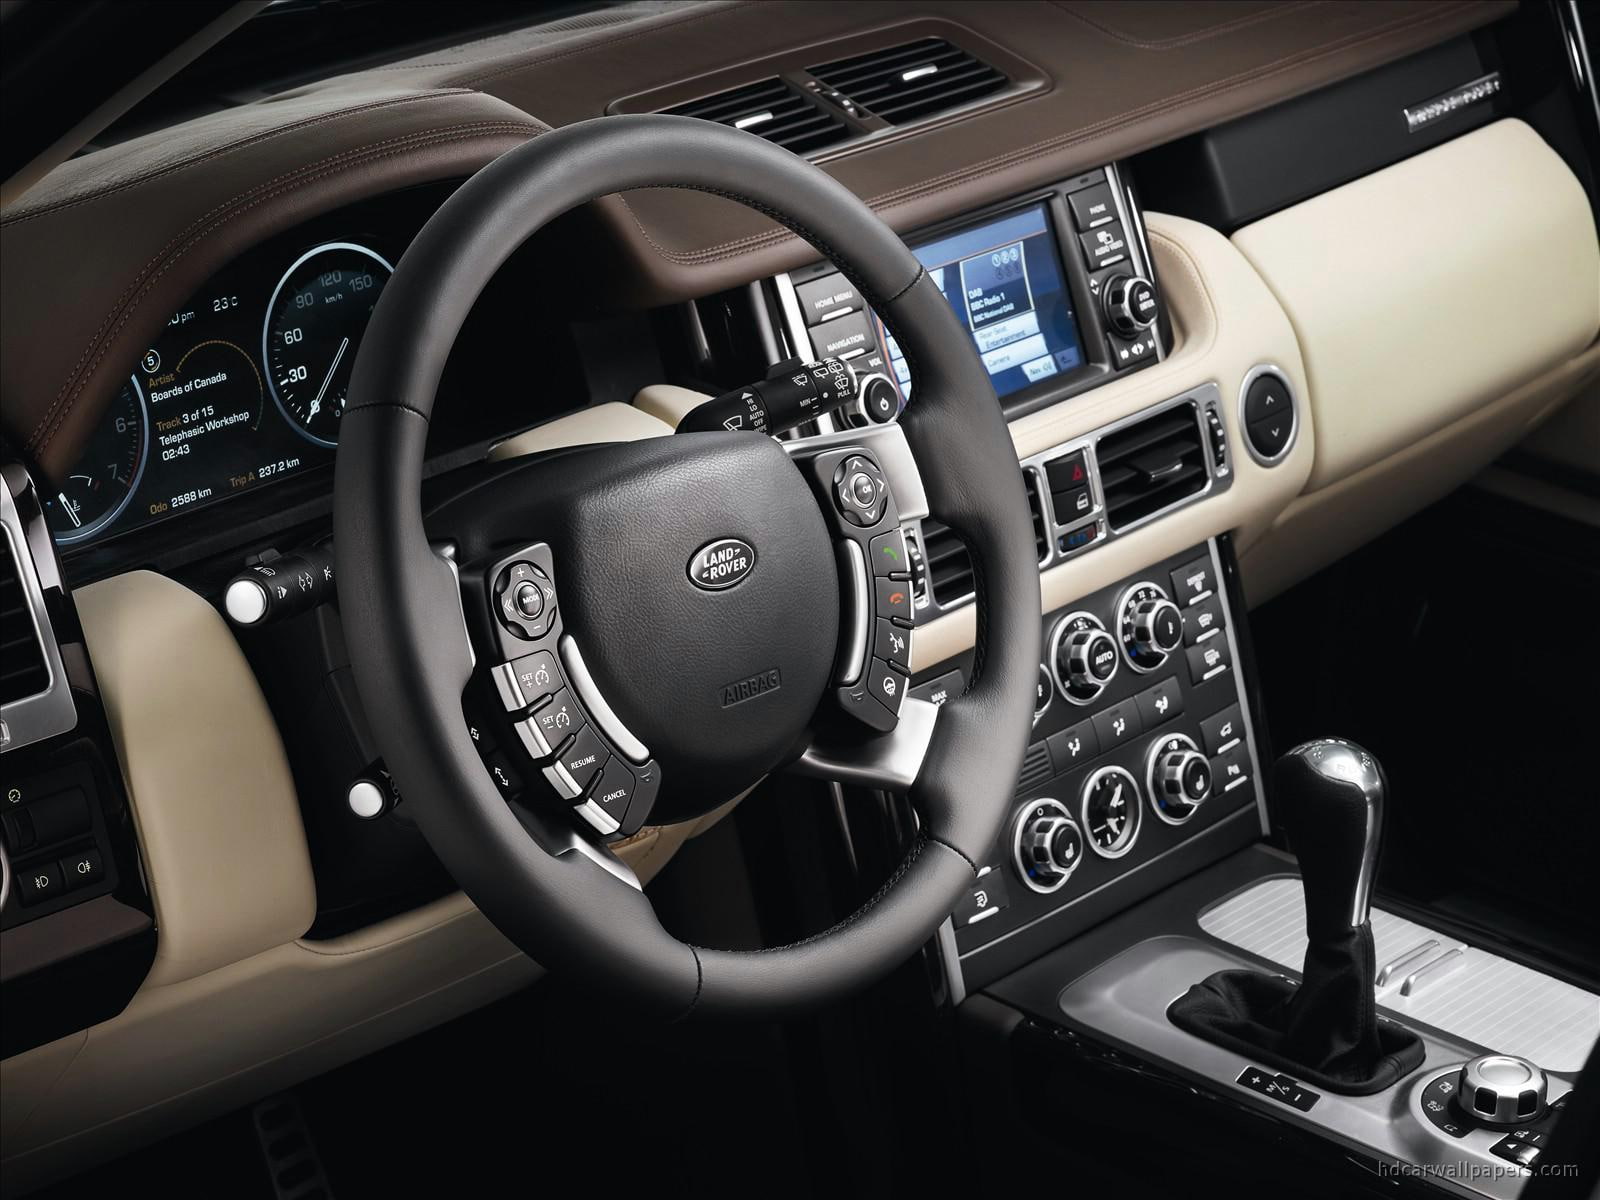 2010 Land Rover Range Rover Interior, black land rover steering wheel